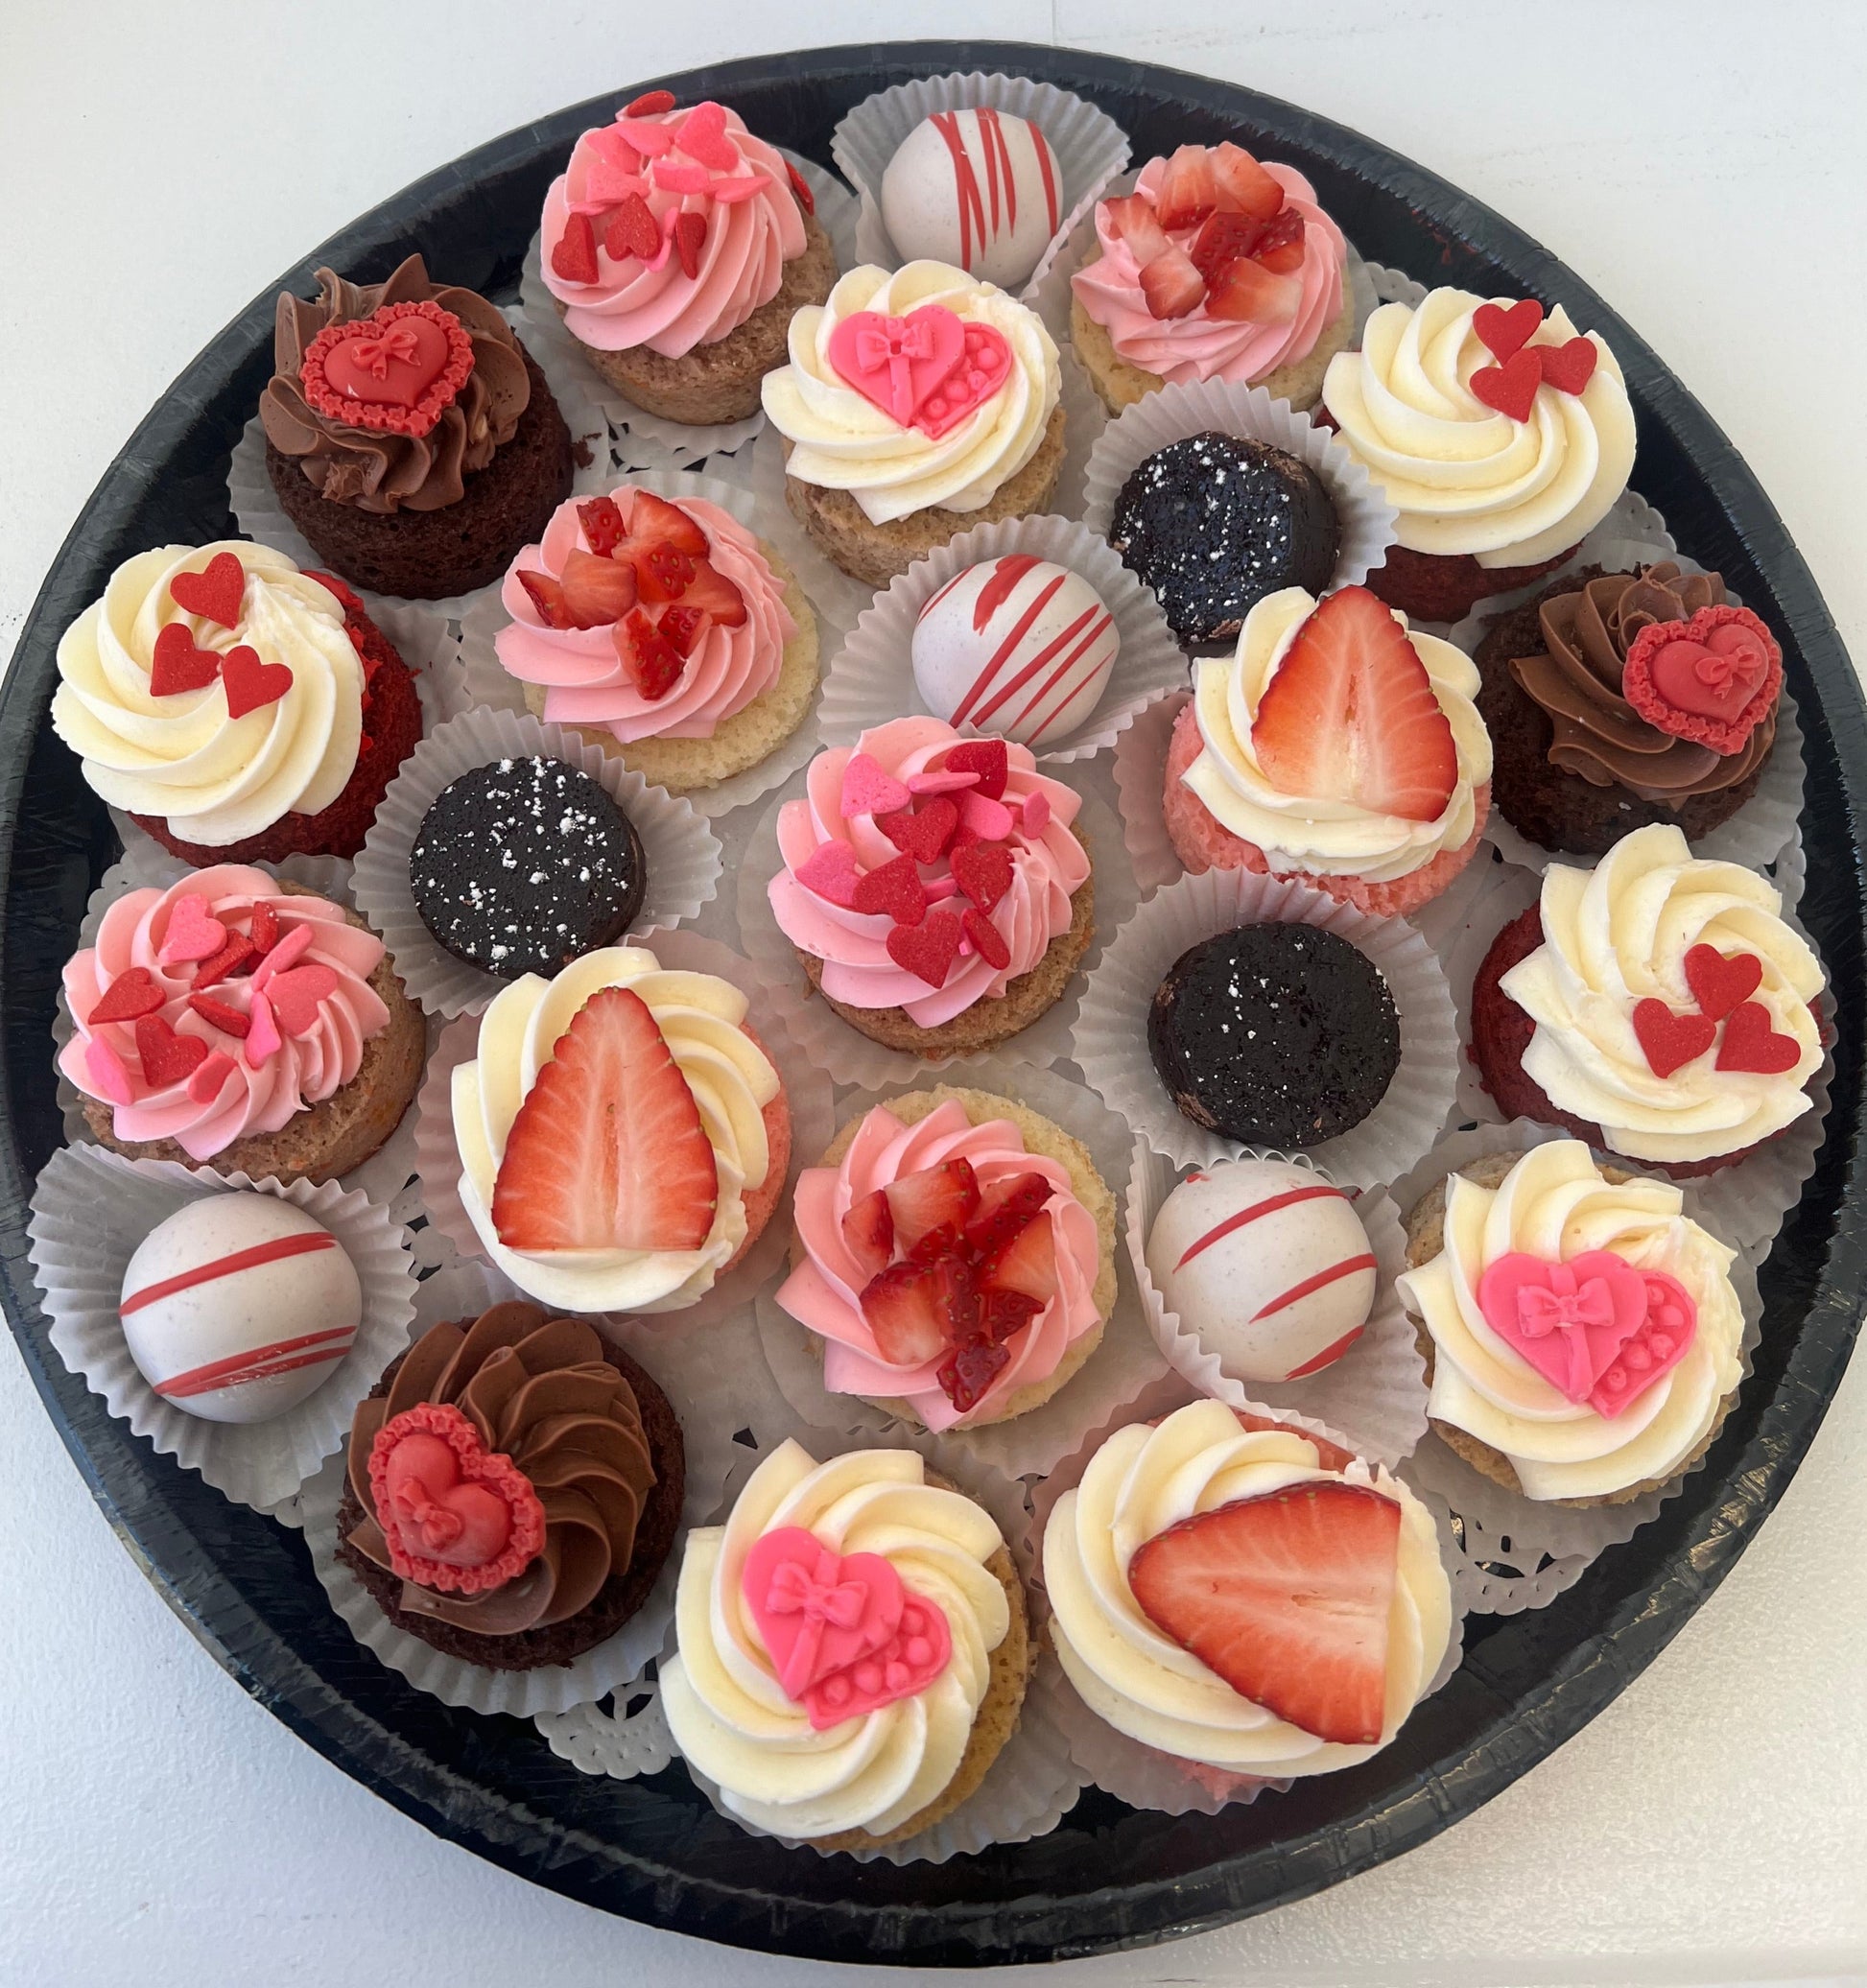 Valentine's Day Tasting Platter - The Dessert Ladies